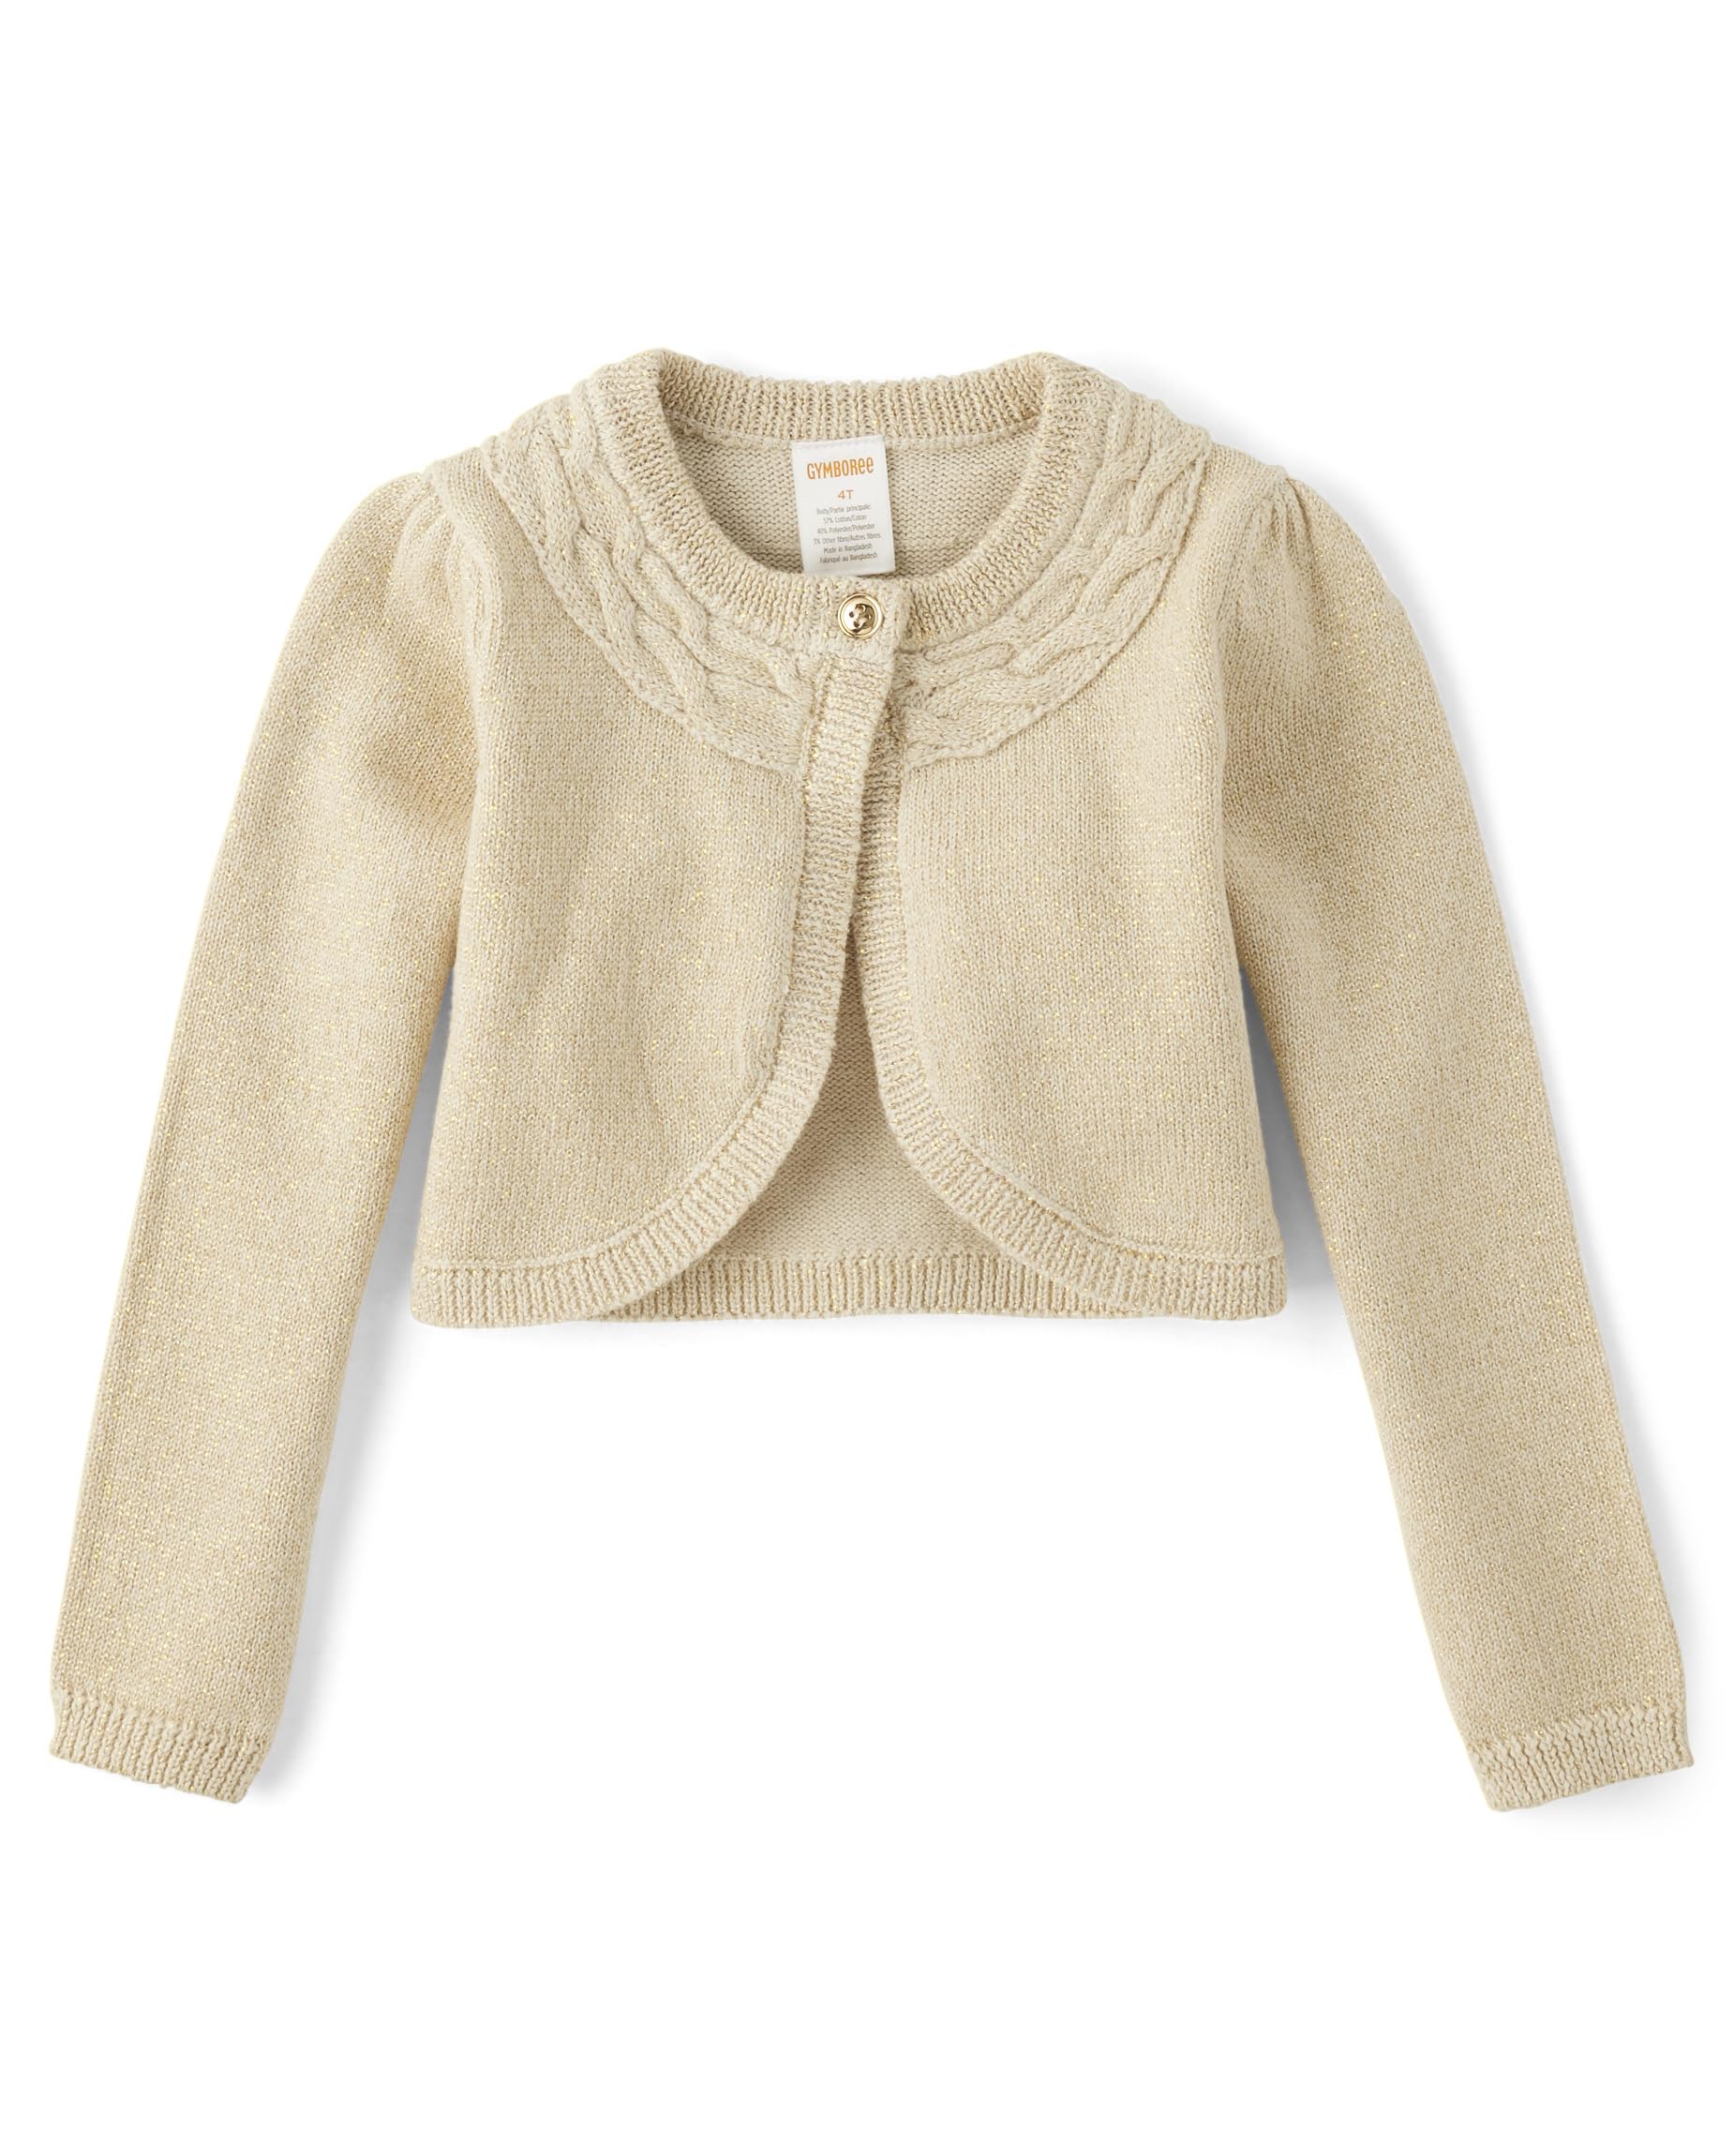 Gymboree Girls' and Toddler Long Sleeve Cardigan Sweaters Seasonal